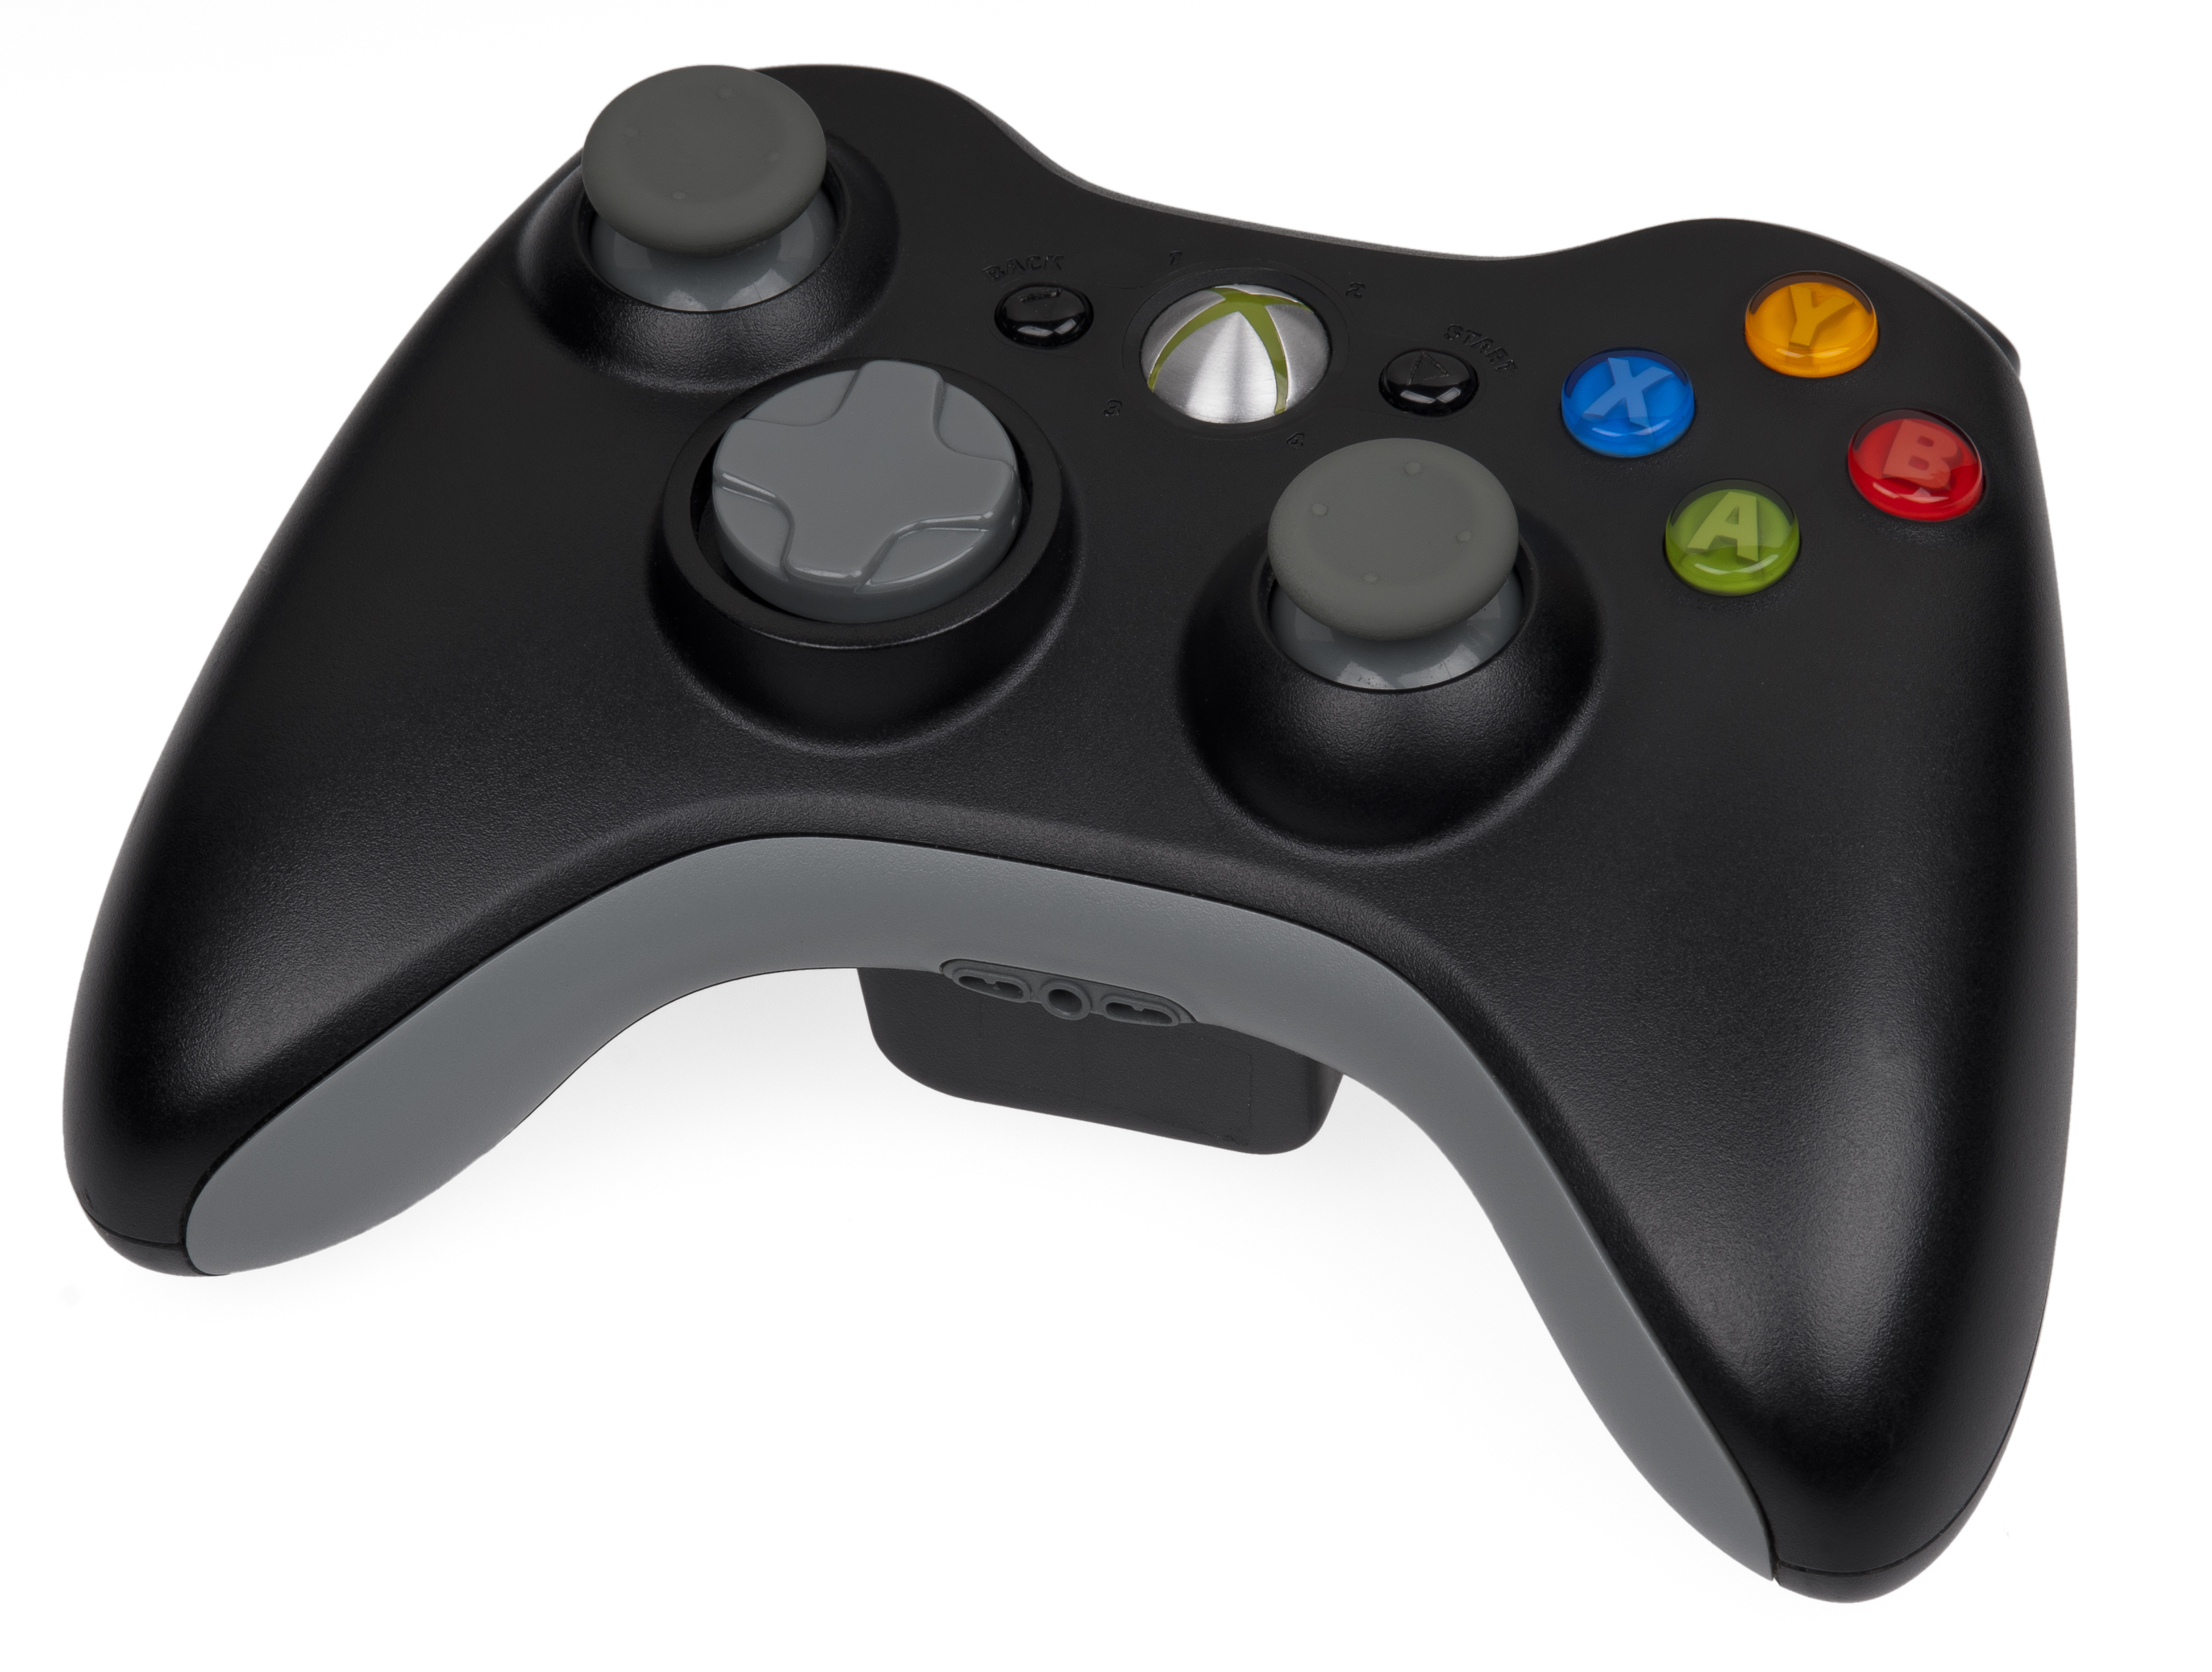 File:Xbox-360-Controller-Black.jpg - Wikipedia